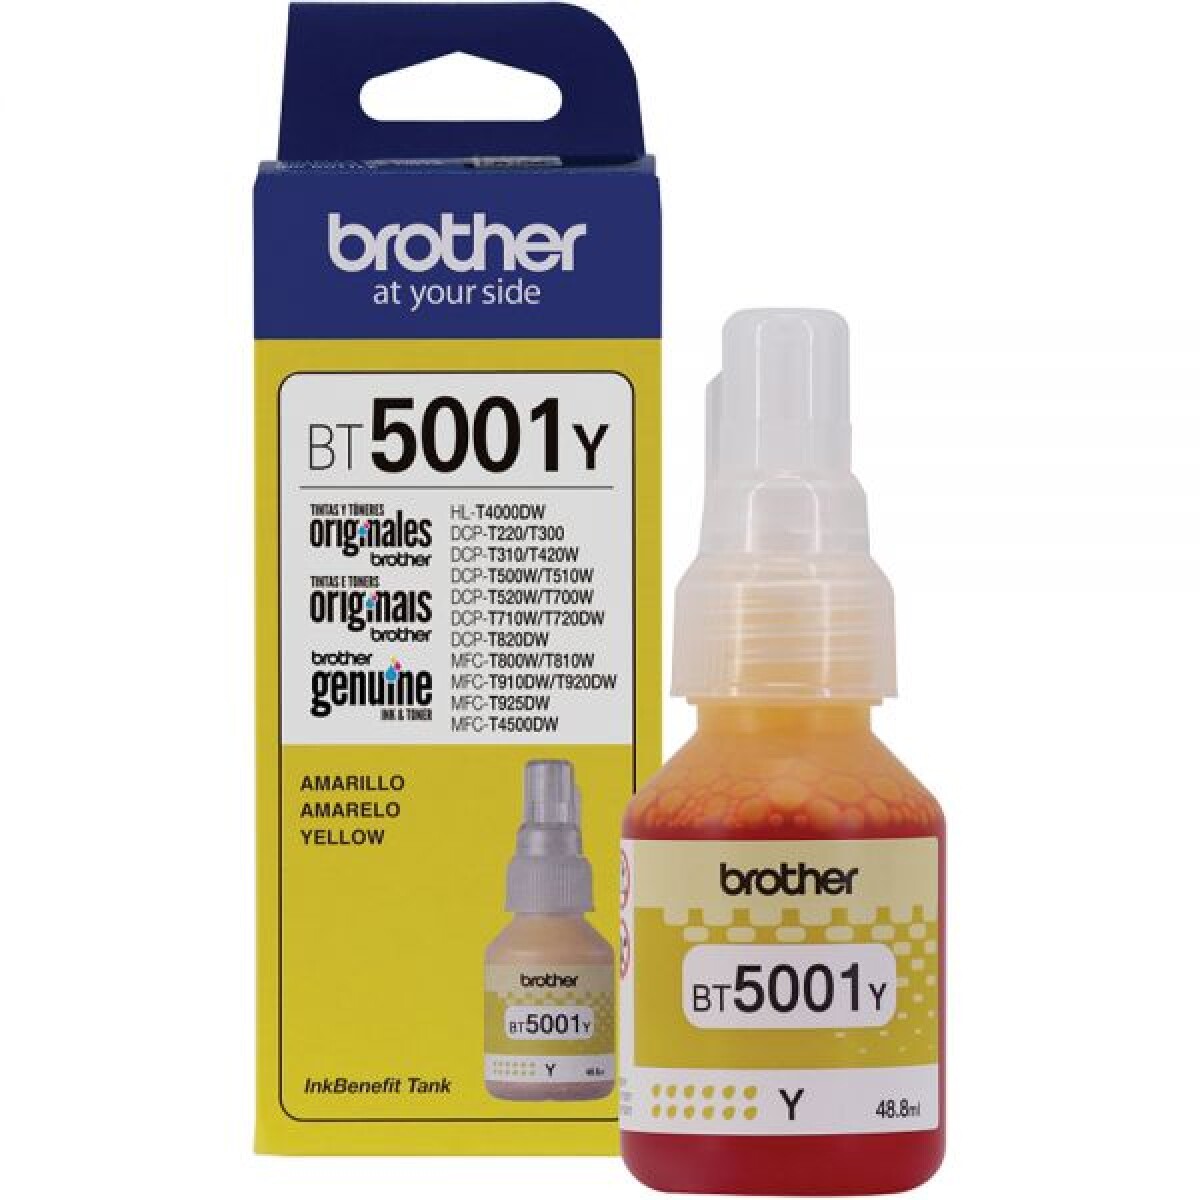 Botella de tinta brother bt5001 48.8ml Yellow